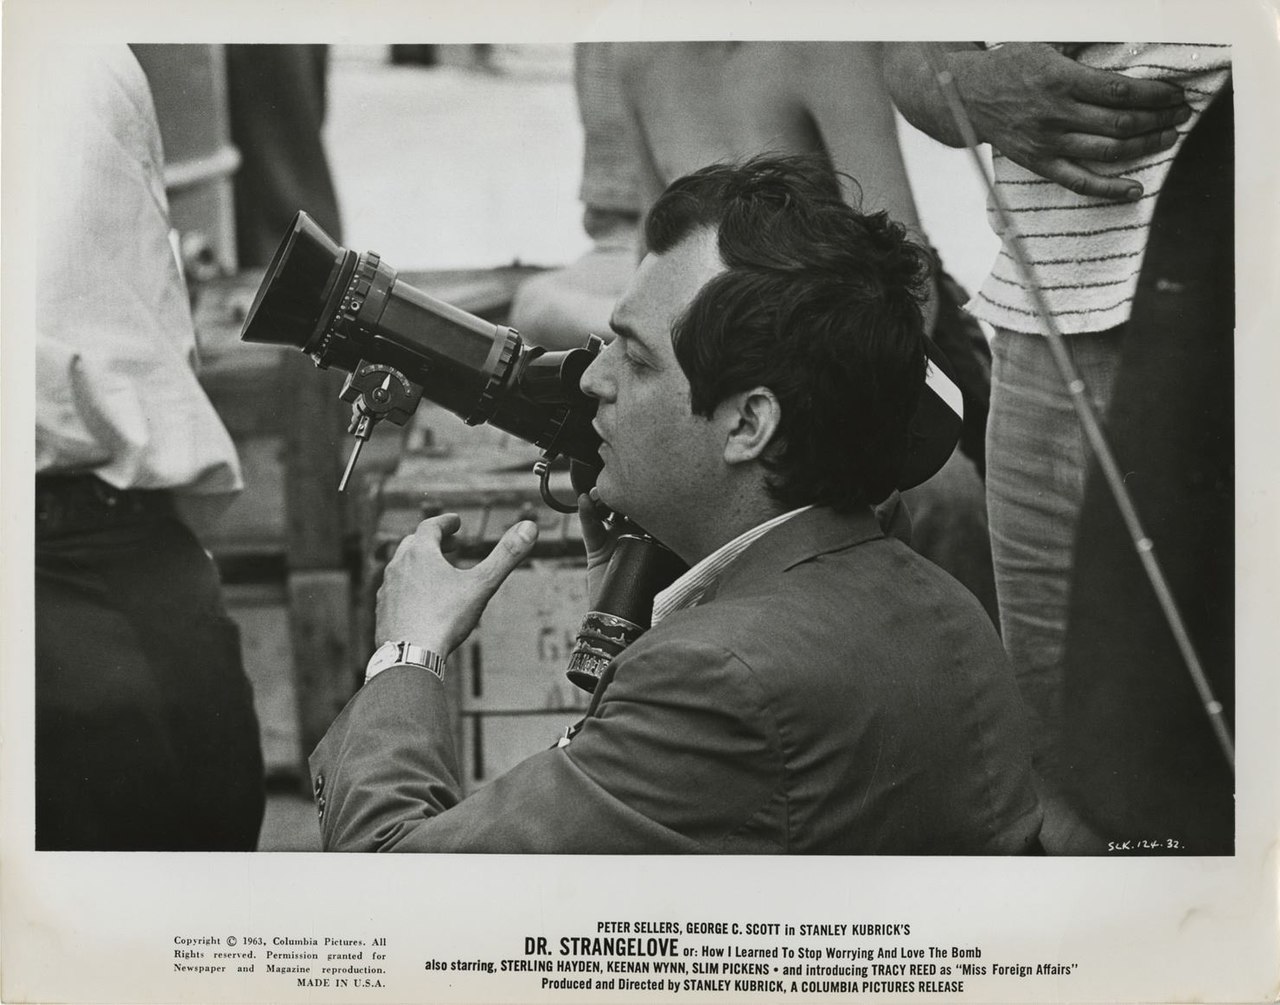 File:Kubrick on the set of Dr. Strangelove (1963 publicity photo,  SLK.124.32 - original).jpg - Wikimedia Commons